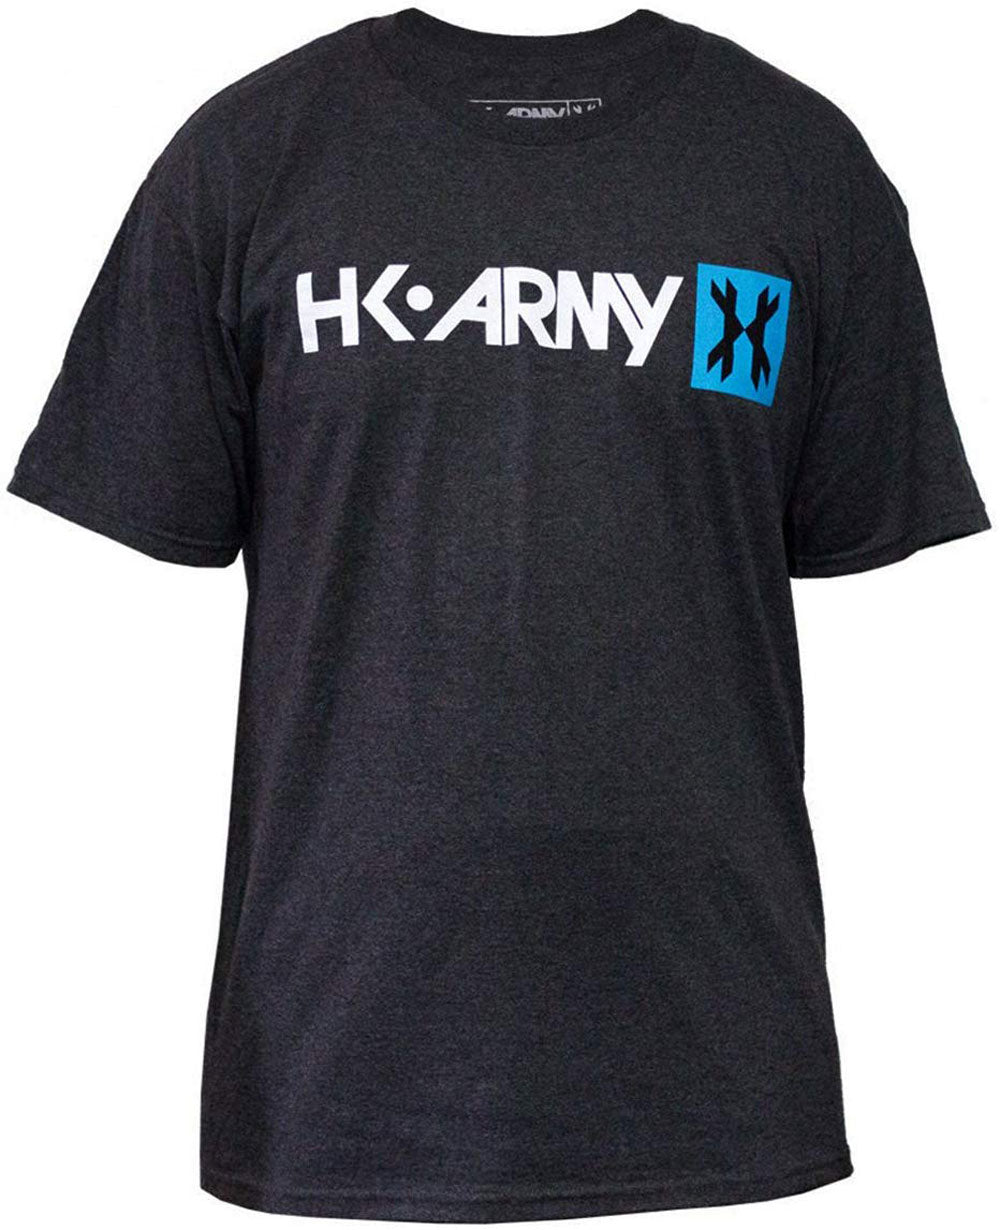 HK Army Icon T-Shirt Charcoal Grey - 2XL - HK Army